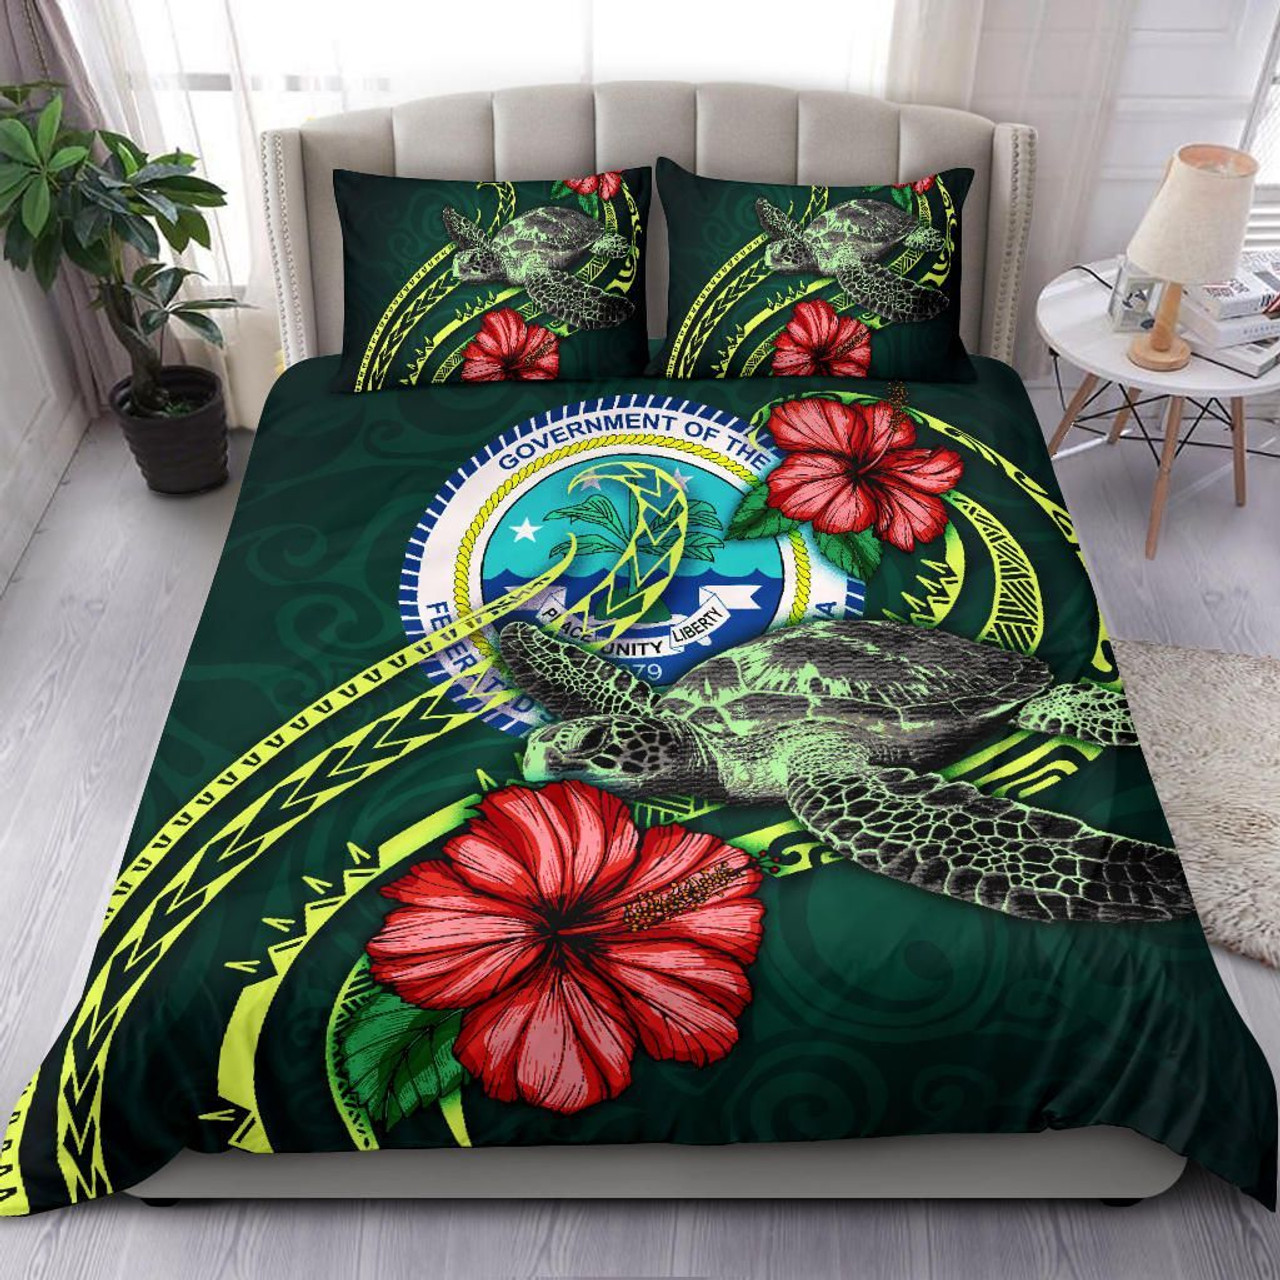 Polynesian Bedding Set - Federated States Of Micronesia Duvet Cover Set Green Turtle Hibiscus 2